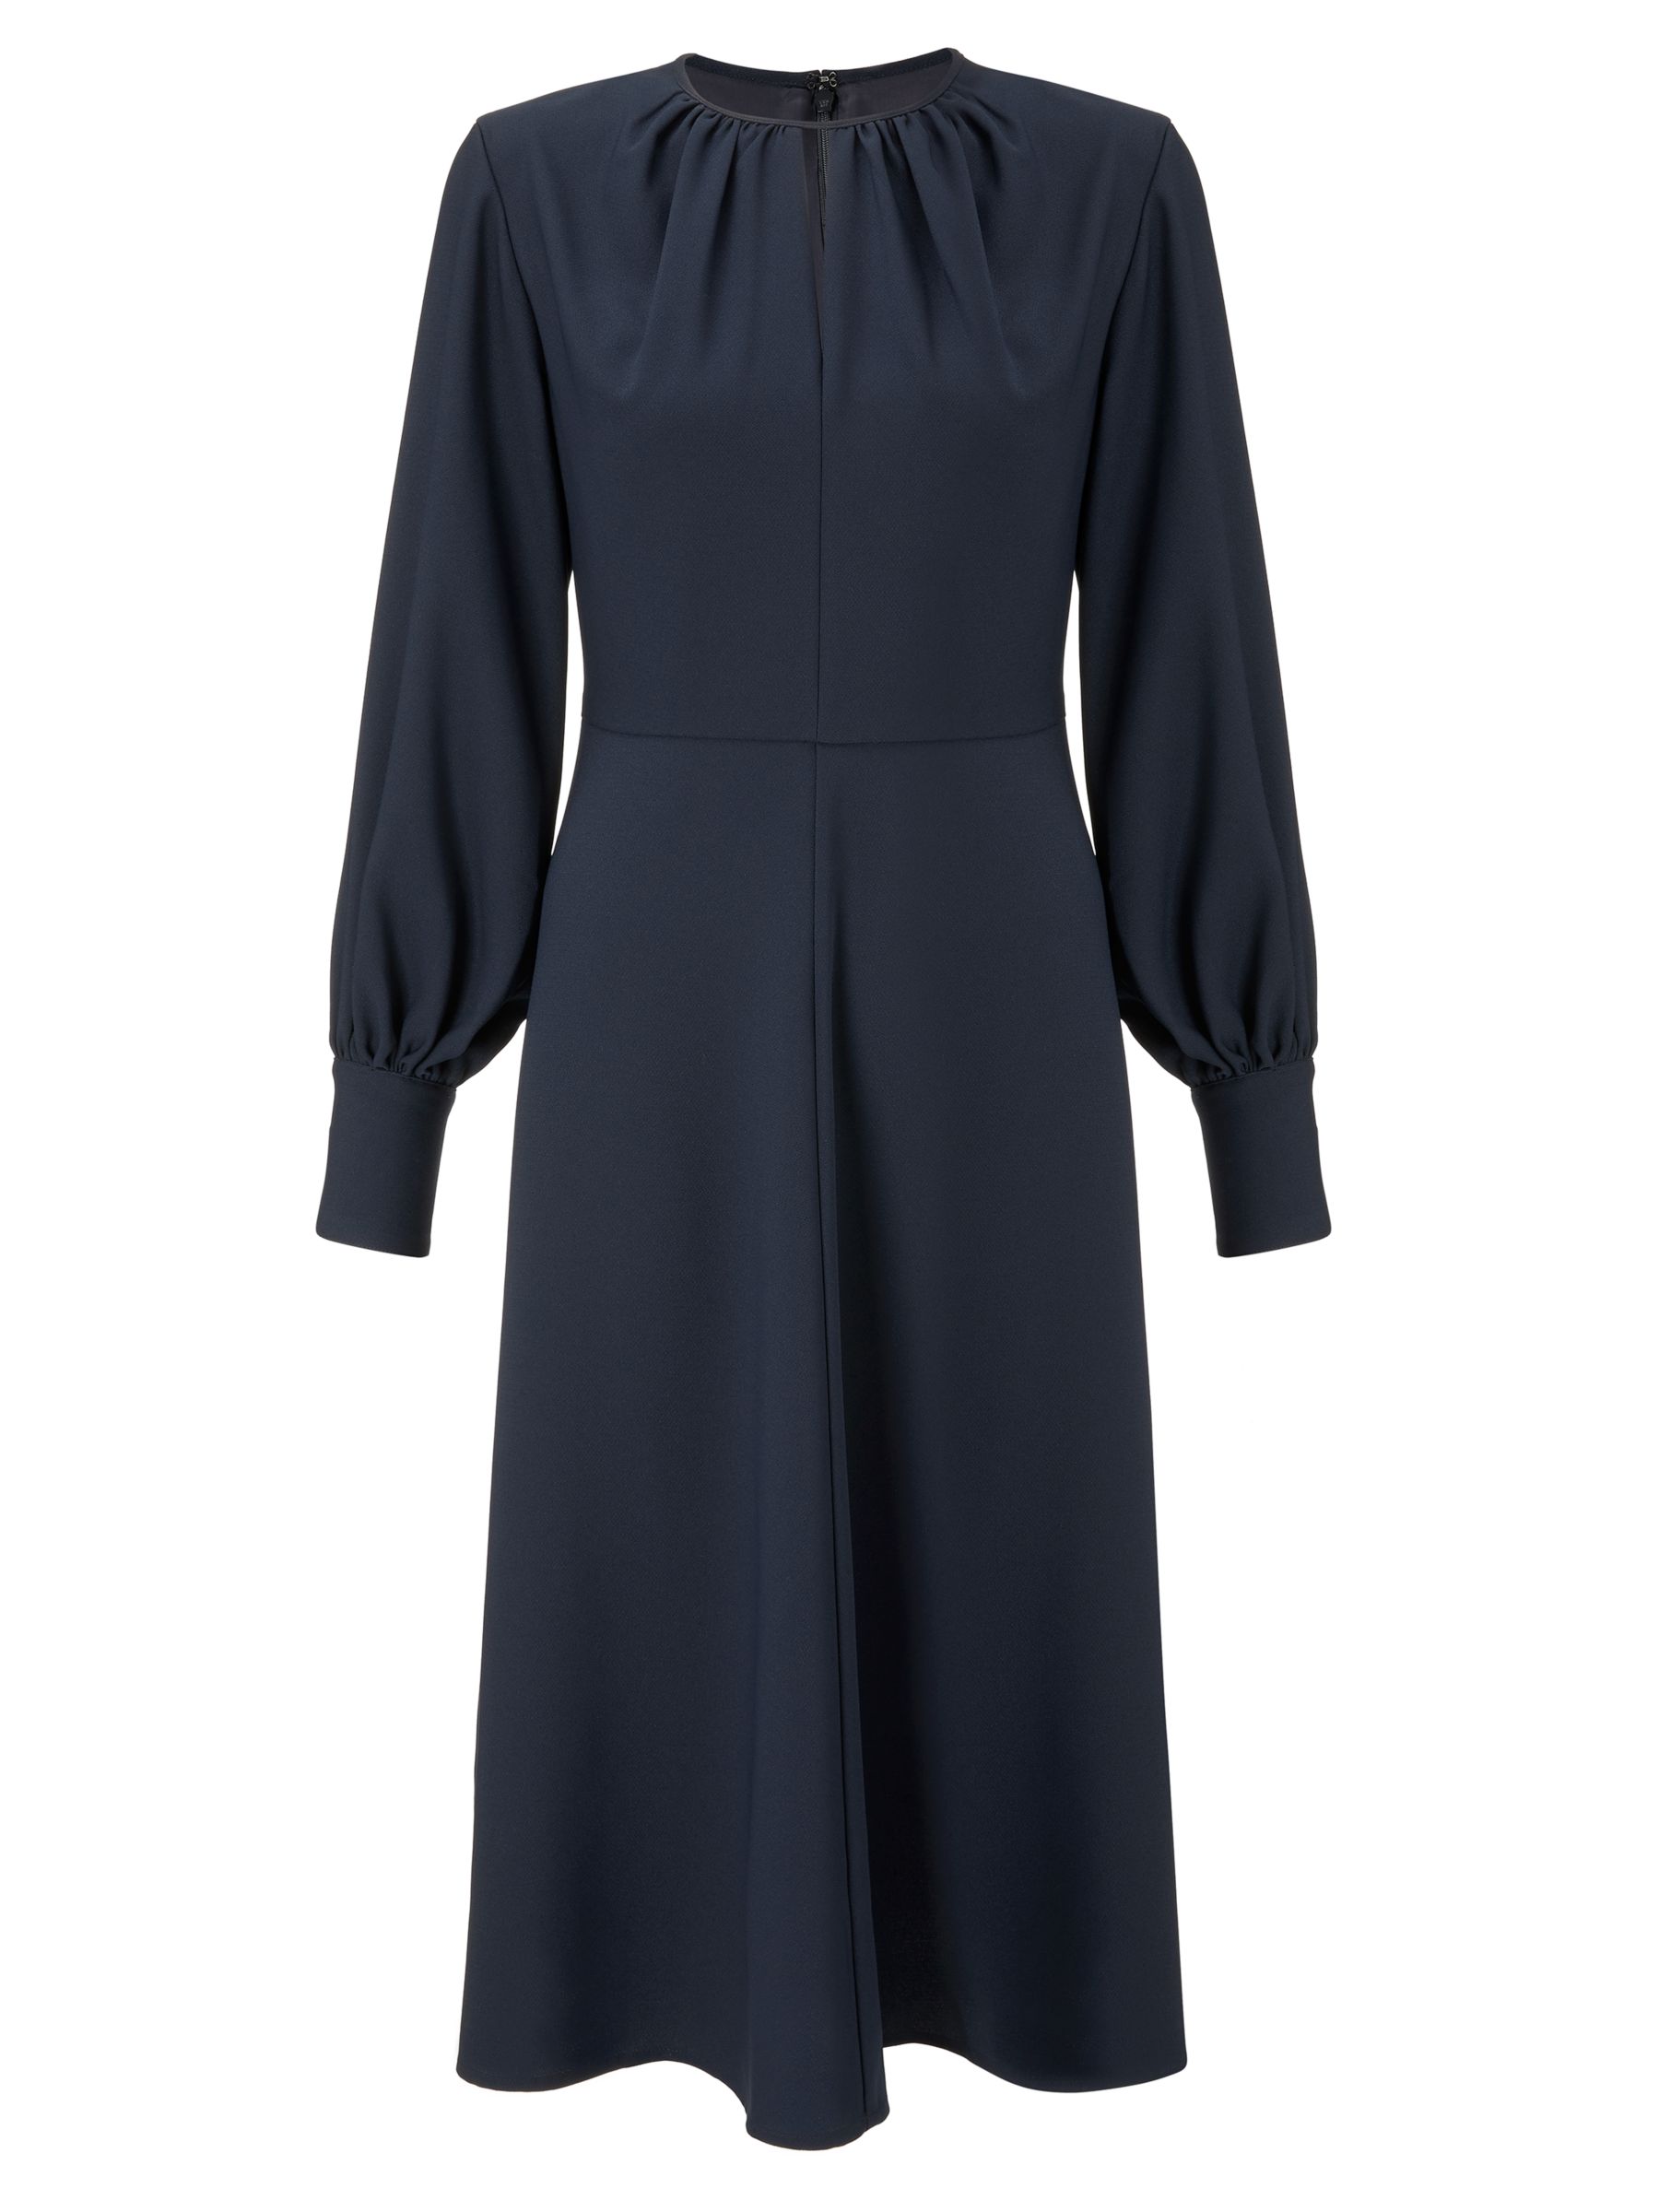 John Lewis & Partners Full Sleeve Midi Dress